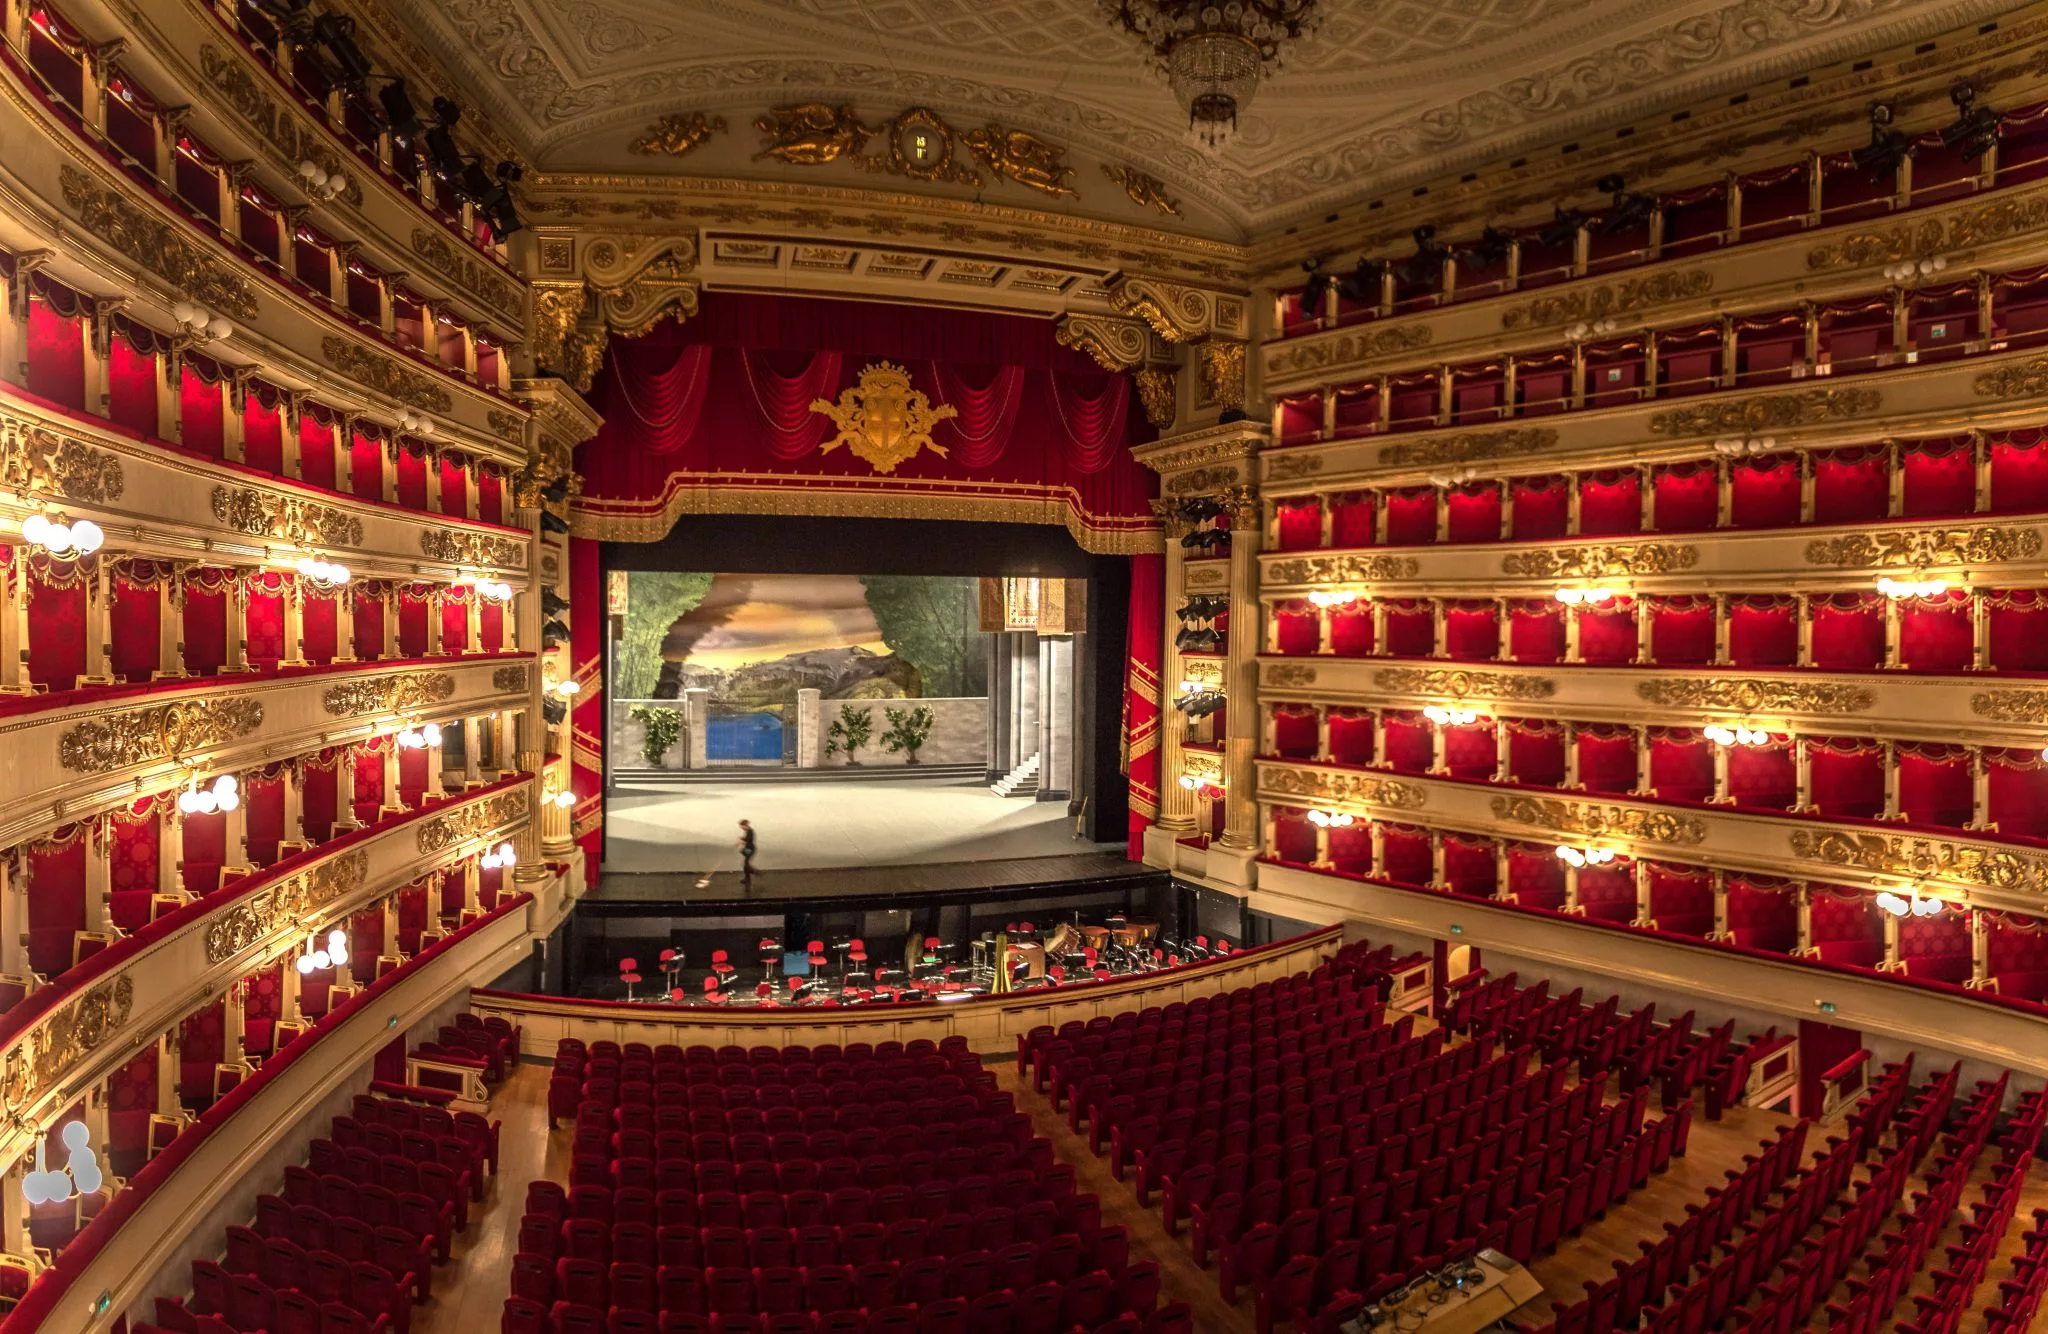 Teatro alla Scala, Italy